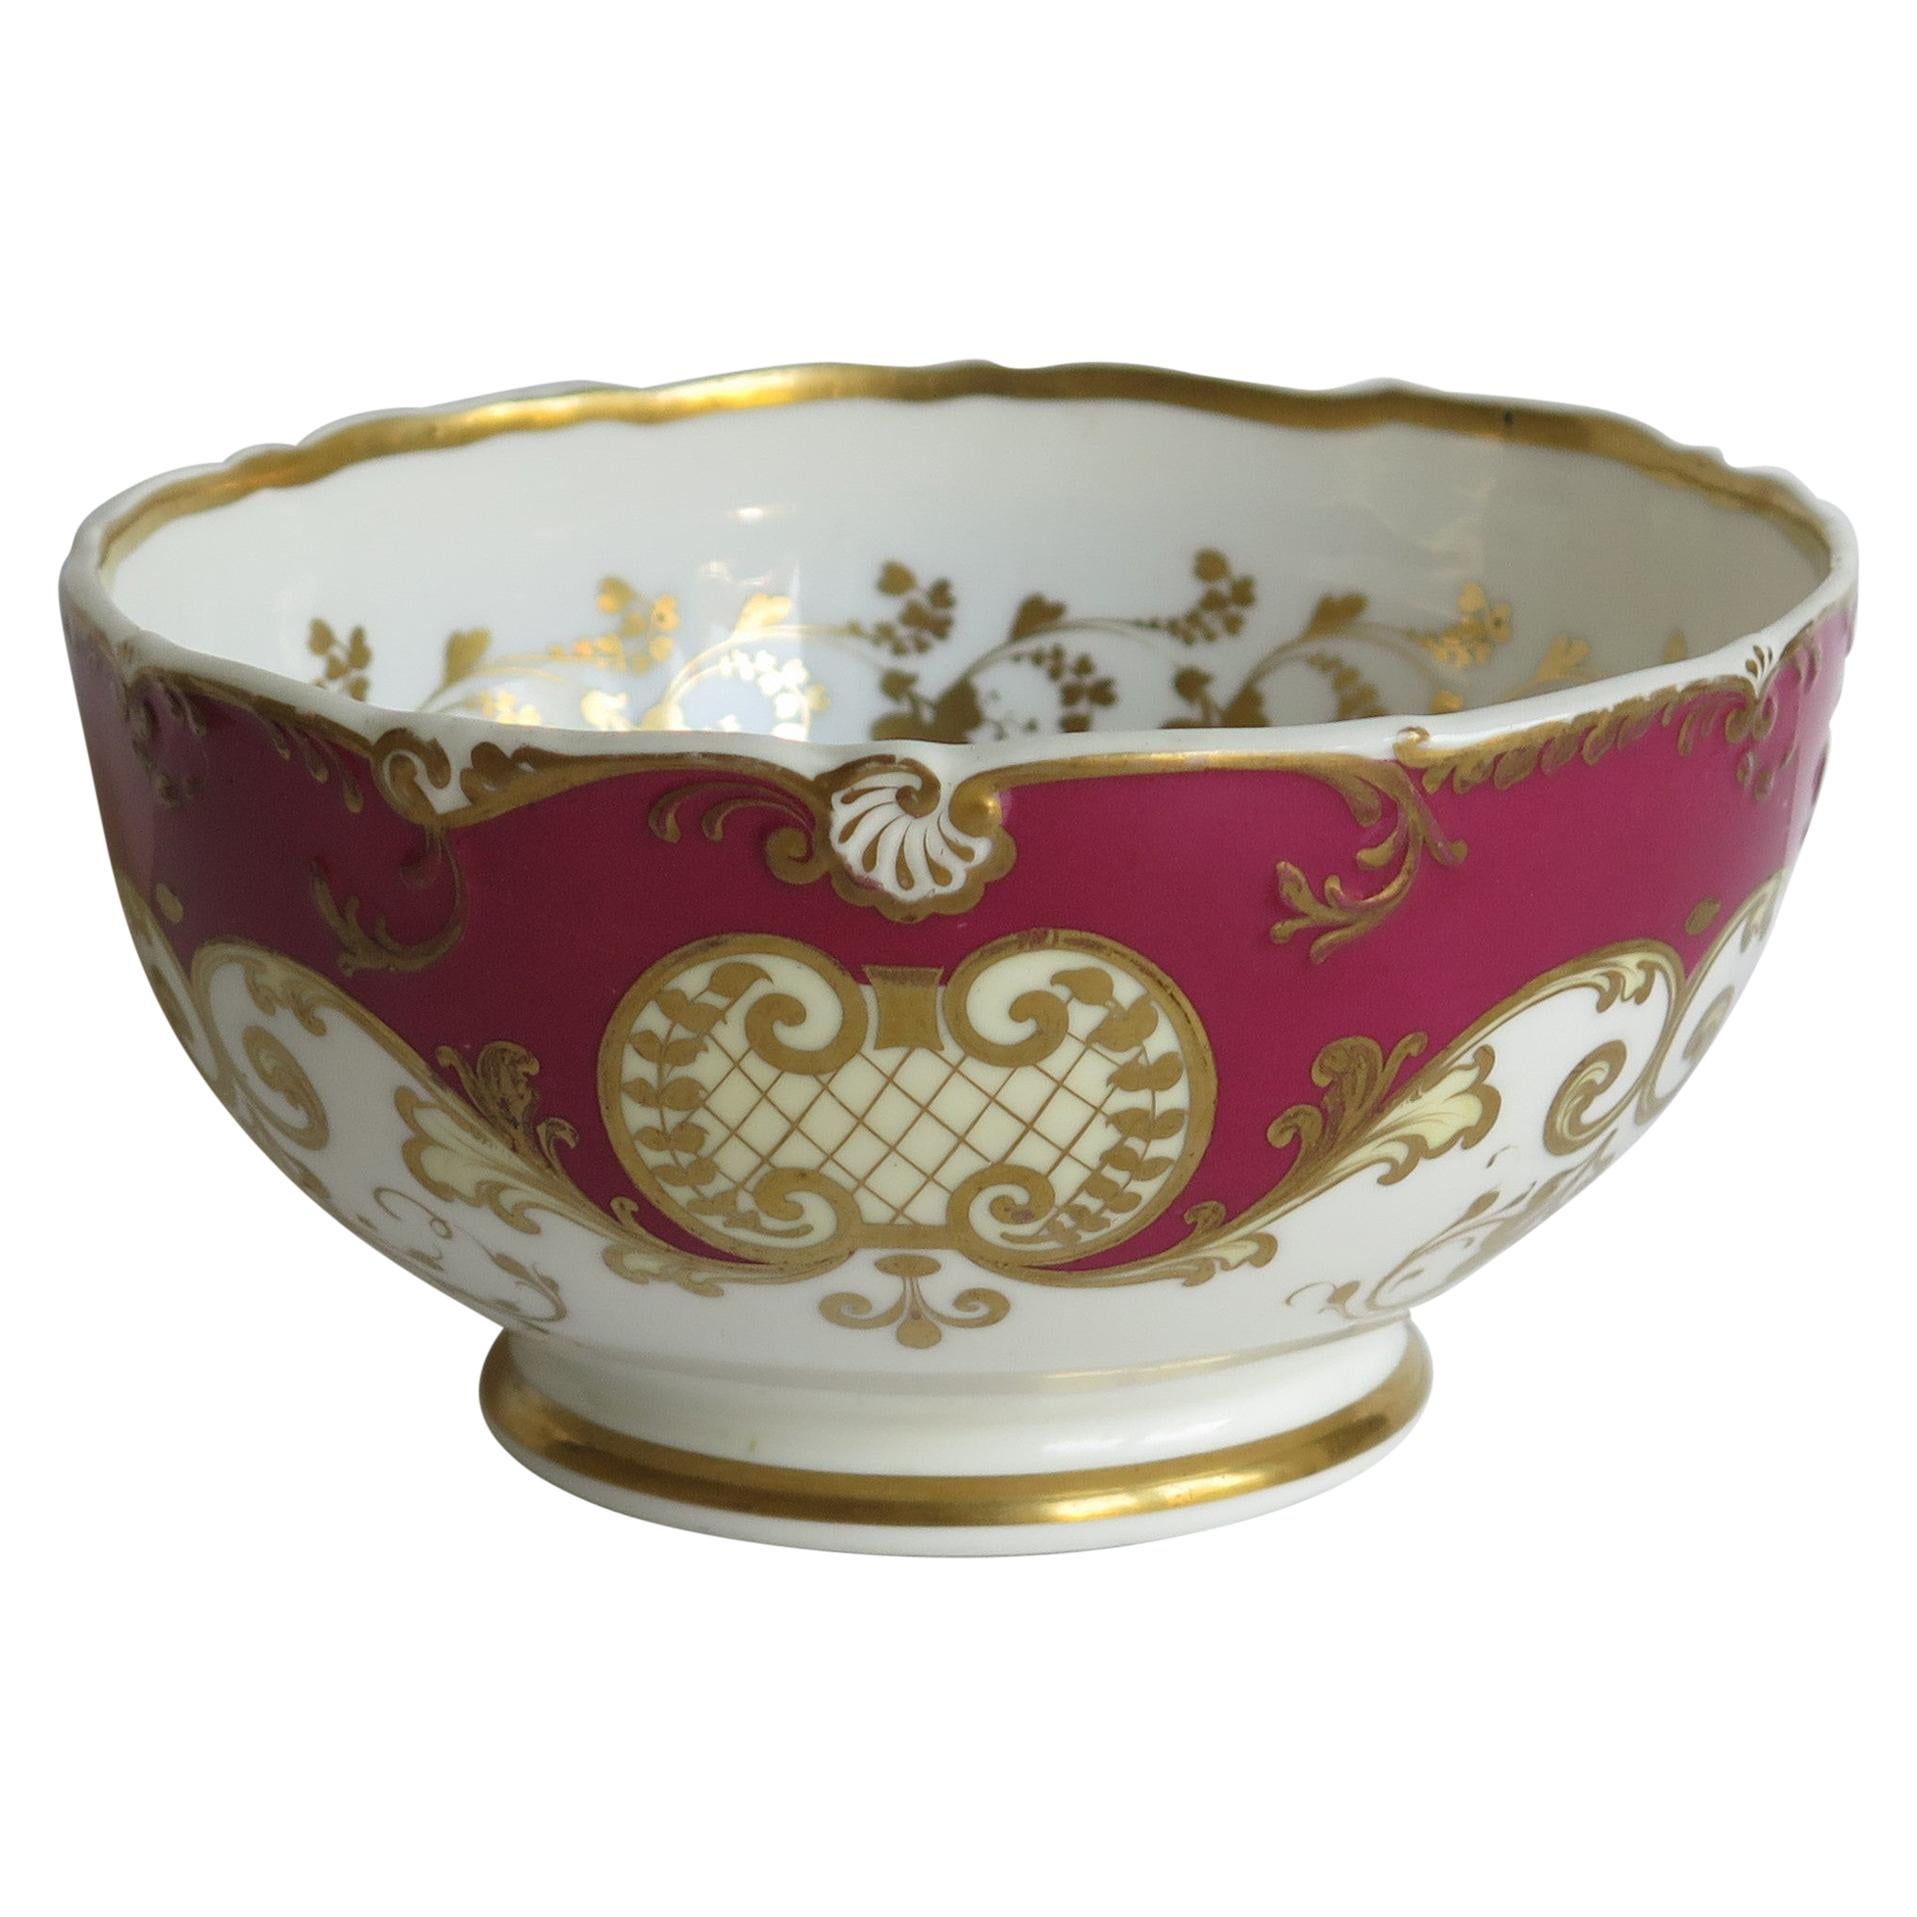 Fine H & R Daniel Porcelain Slop Bowl in Recorded Pattern 4789, circa 1830